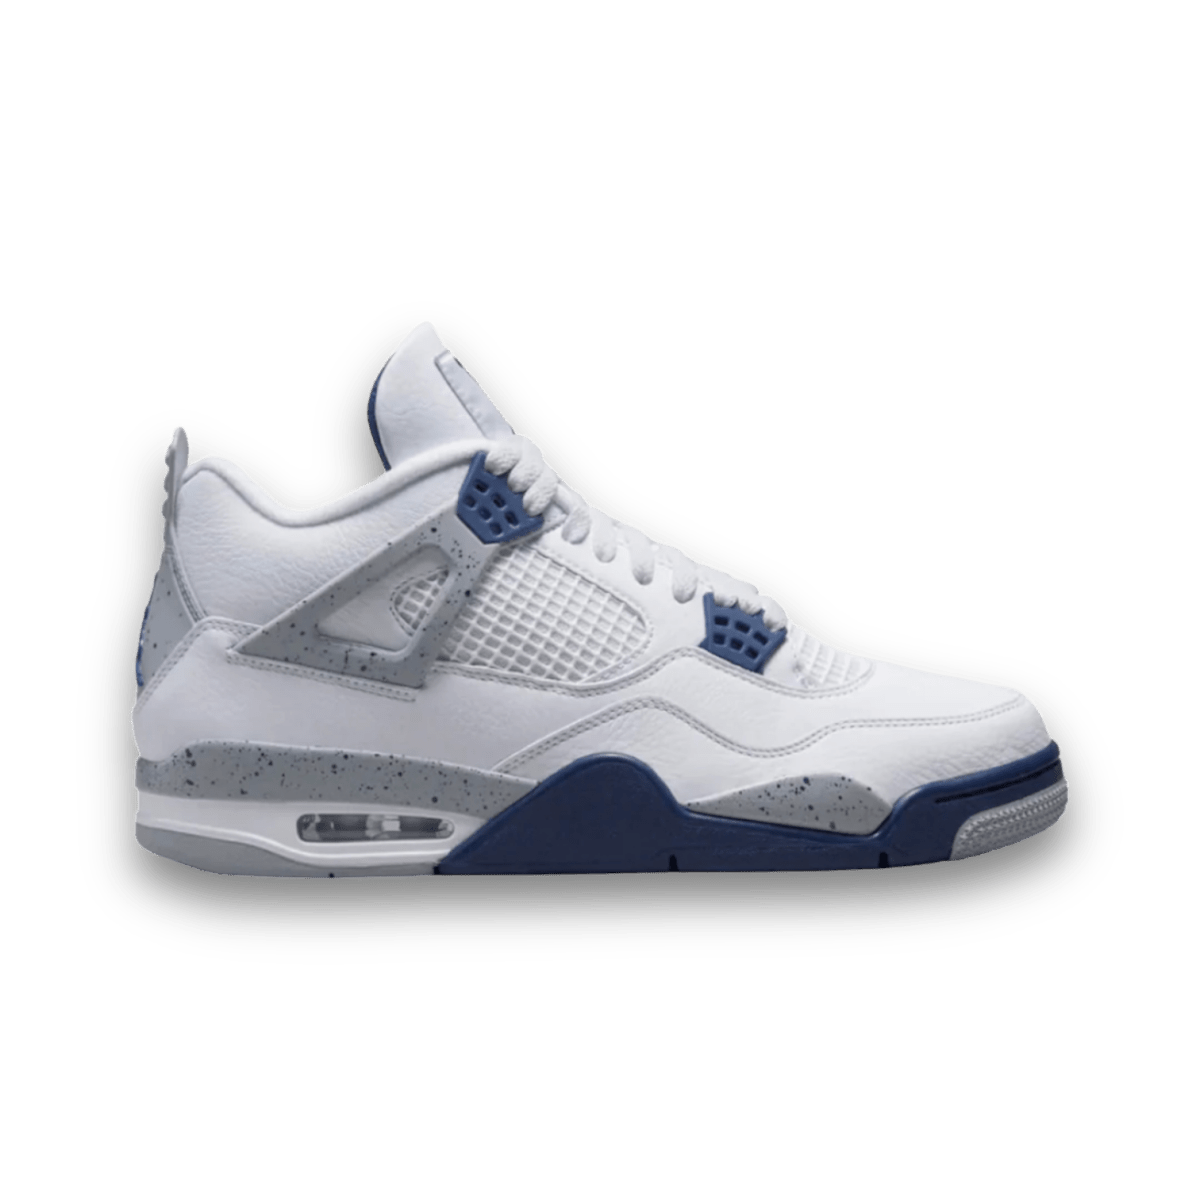 Air Jordan 4 Midnight Navy - Grade School - Mid Sneaker - Jawns on Fire Sneakers & Streetwear